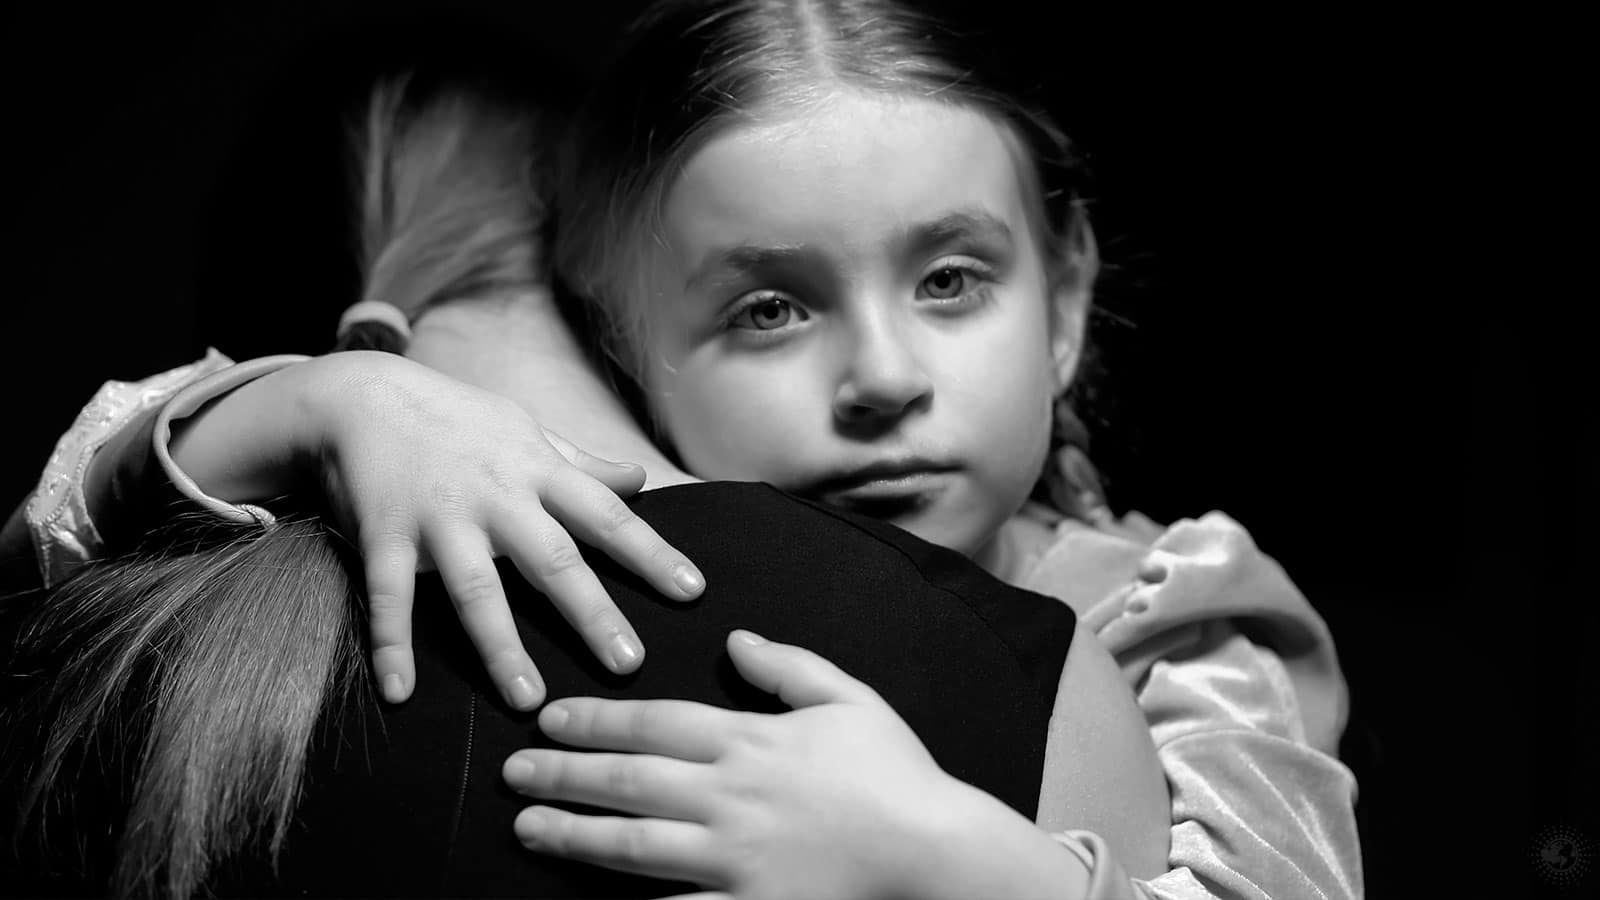 hugging kids benefits